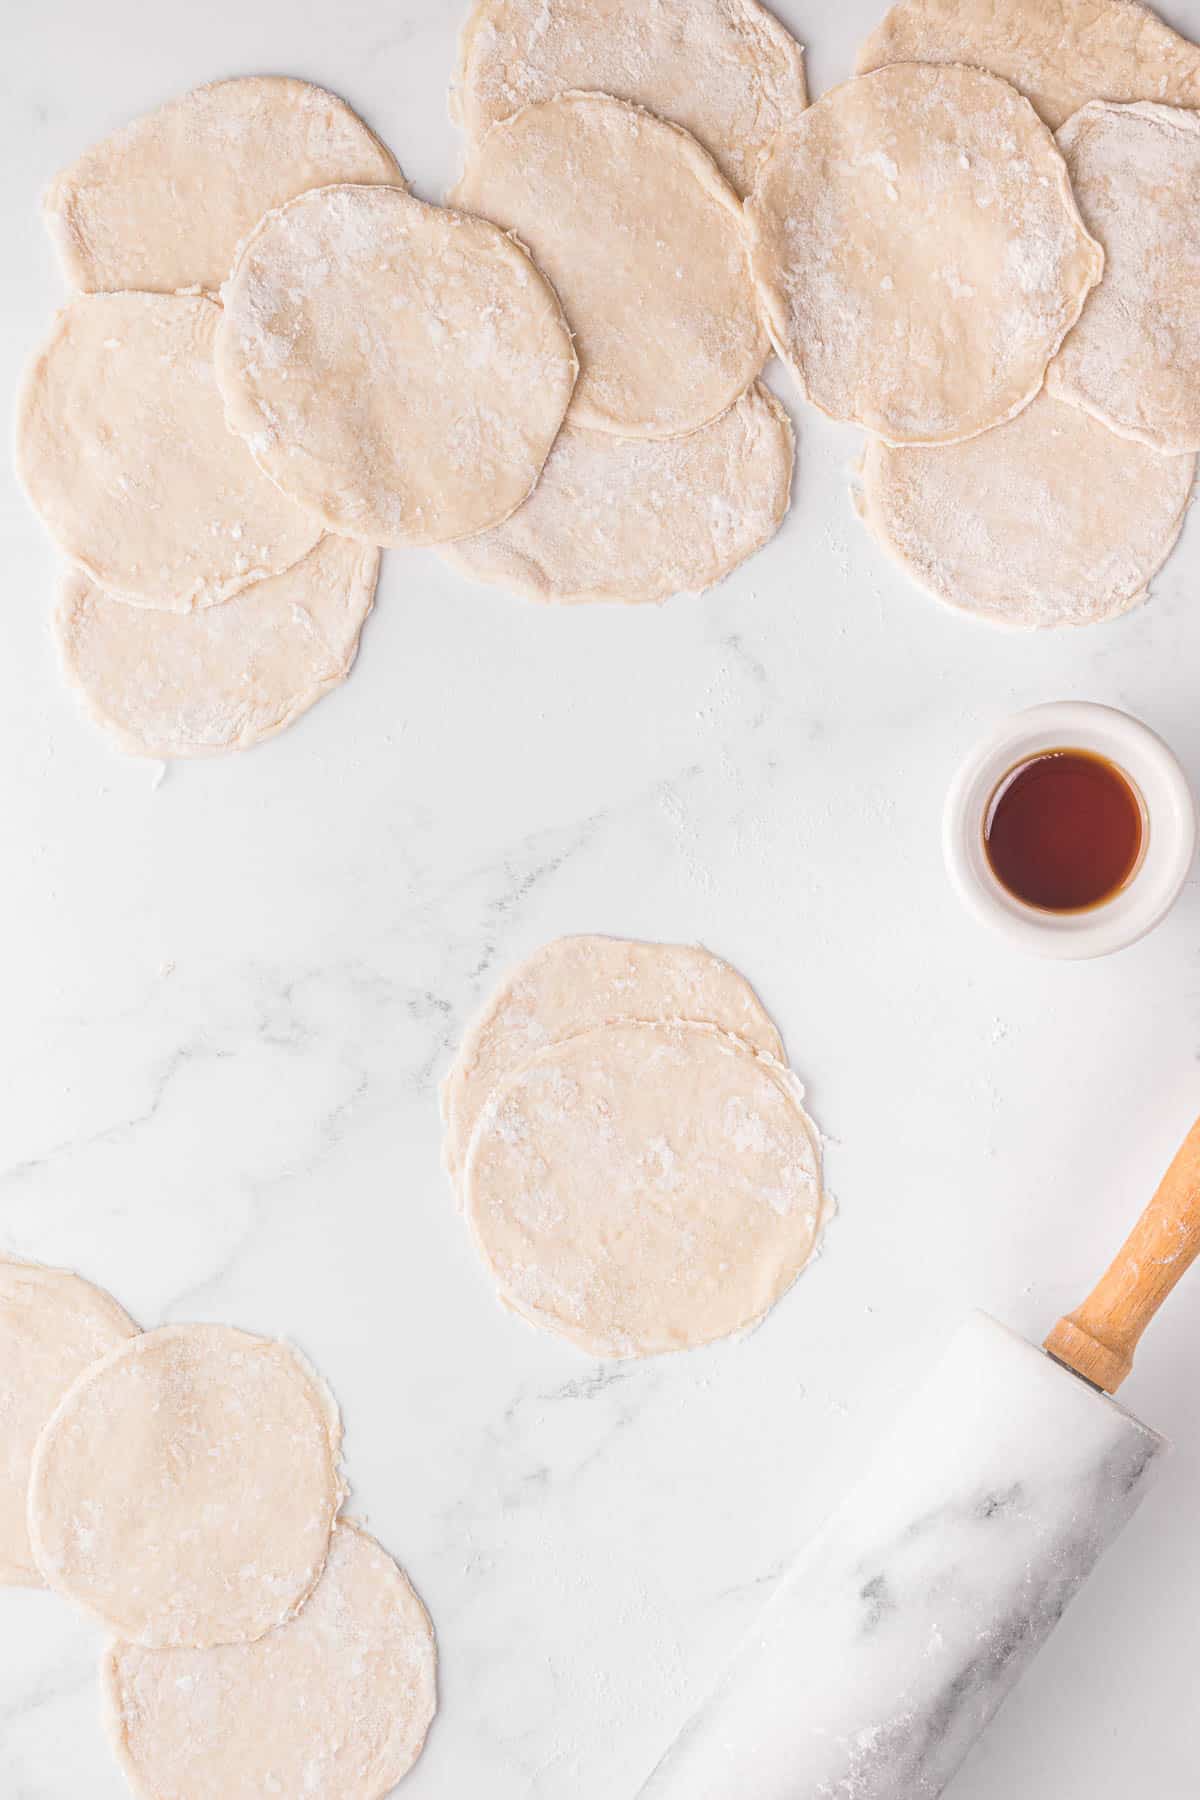 matching small circles of dough to make Mandarin pancakes.